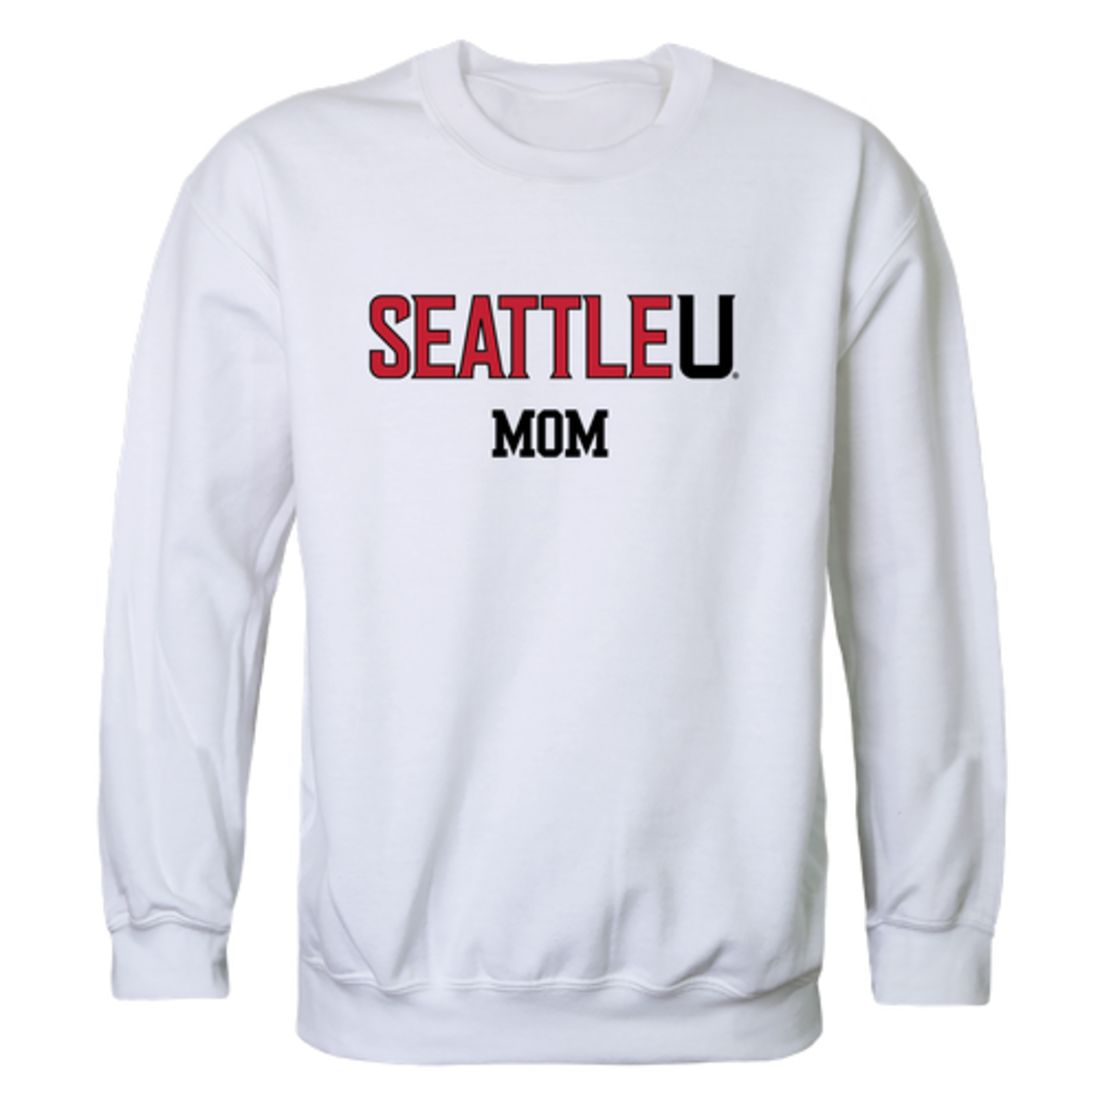 Seattle University Redhawks Mom Fleece Crewneck Pullover Sweatshirt Heather Grey Small-Campus-Wardrobe